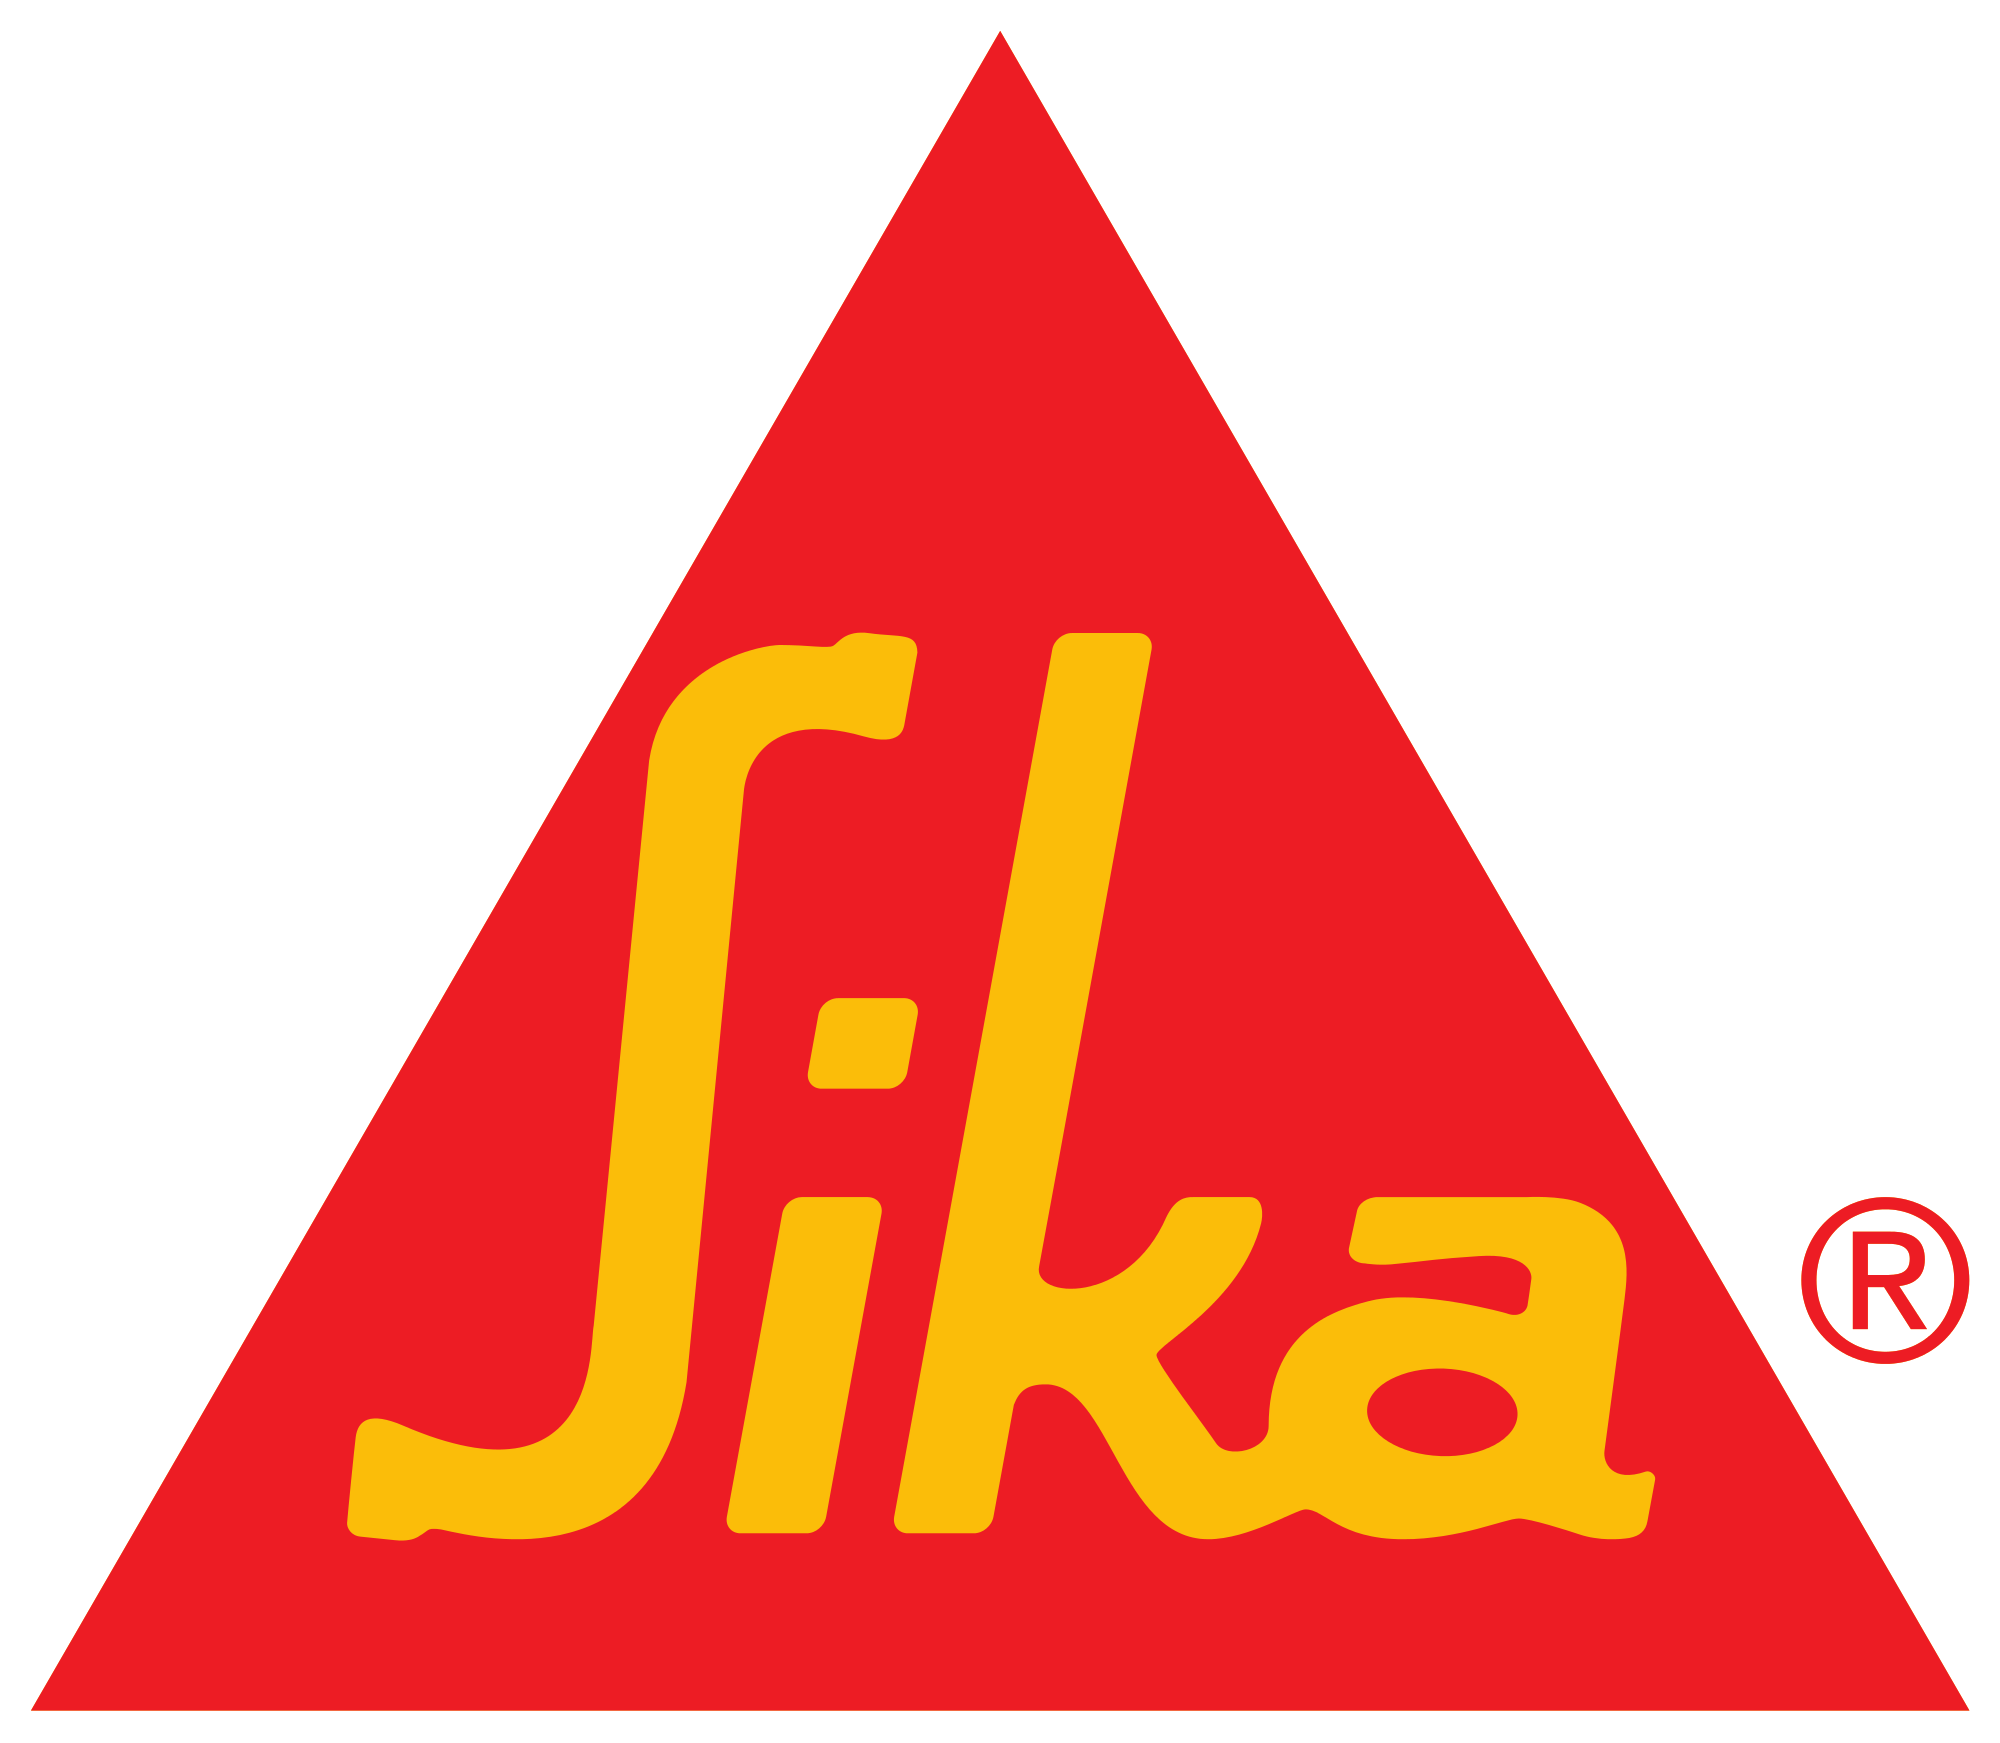 Logo_Sika_AG.svg.png